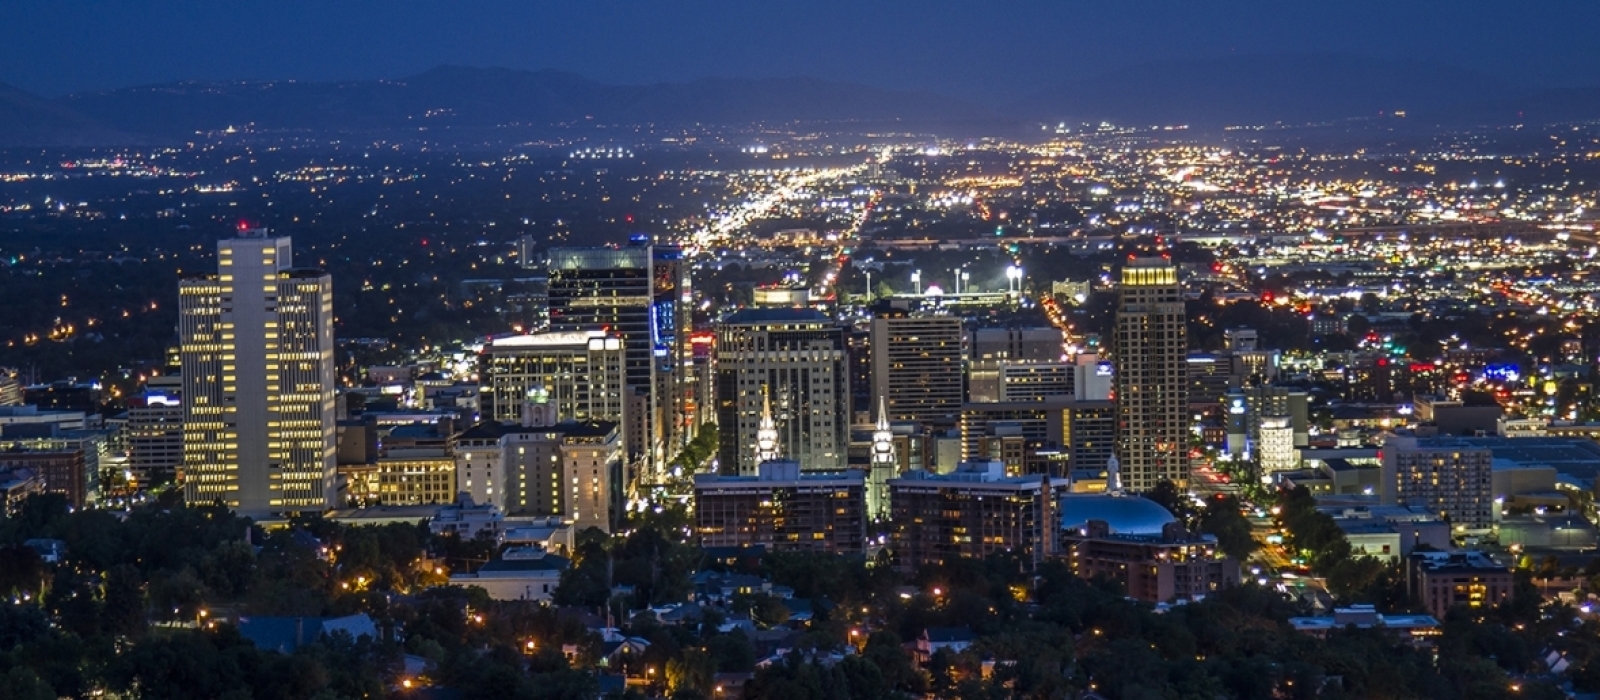 Downtown Alliance - Salt Lake City, Utah - Our Mission